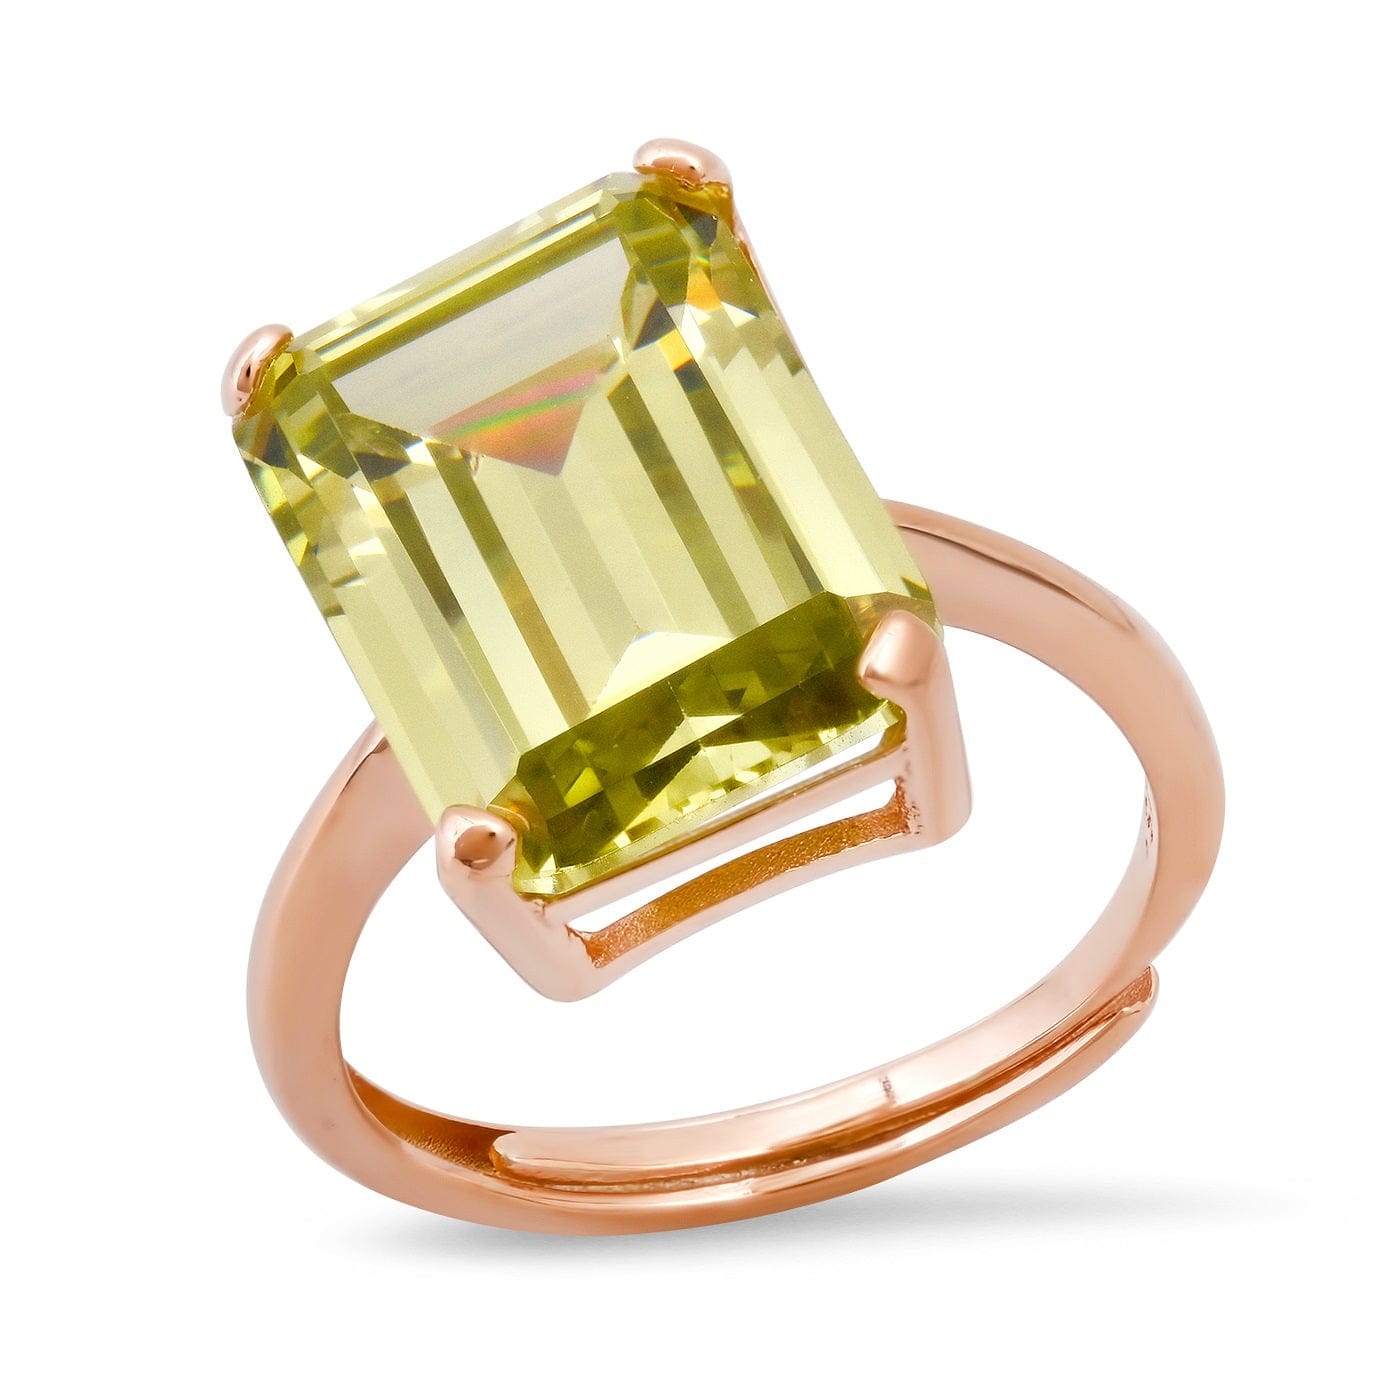 TAI JEWELRY Rings Rose Gold Vermeil/Peridot Emerald Cut Solitaire Ring